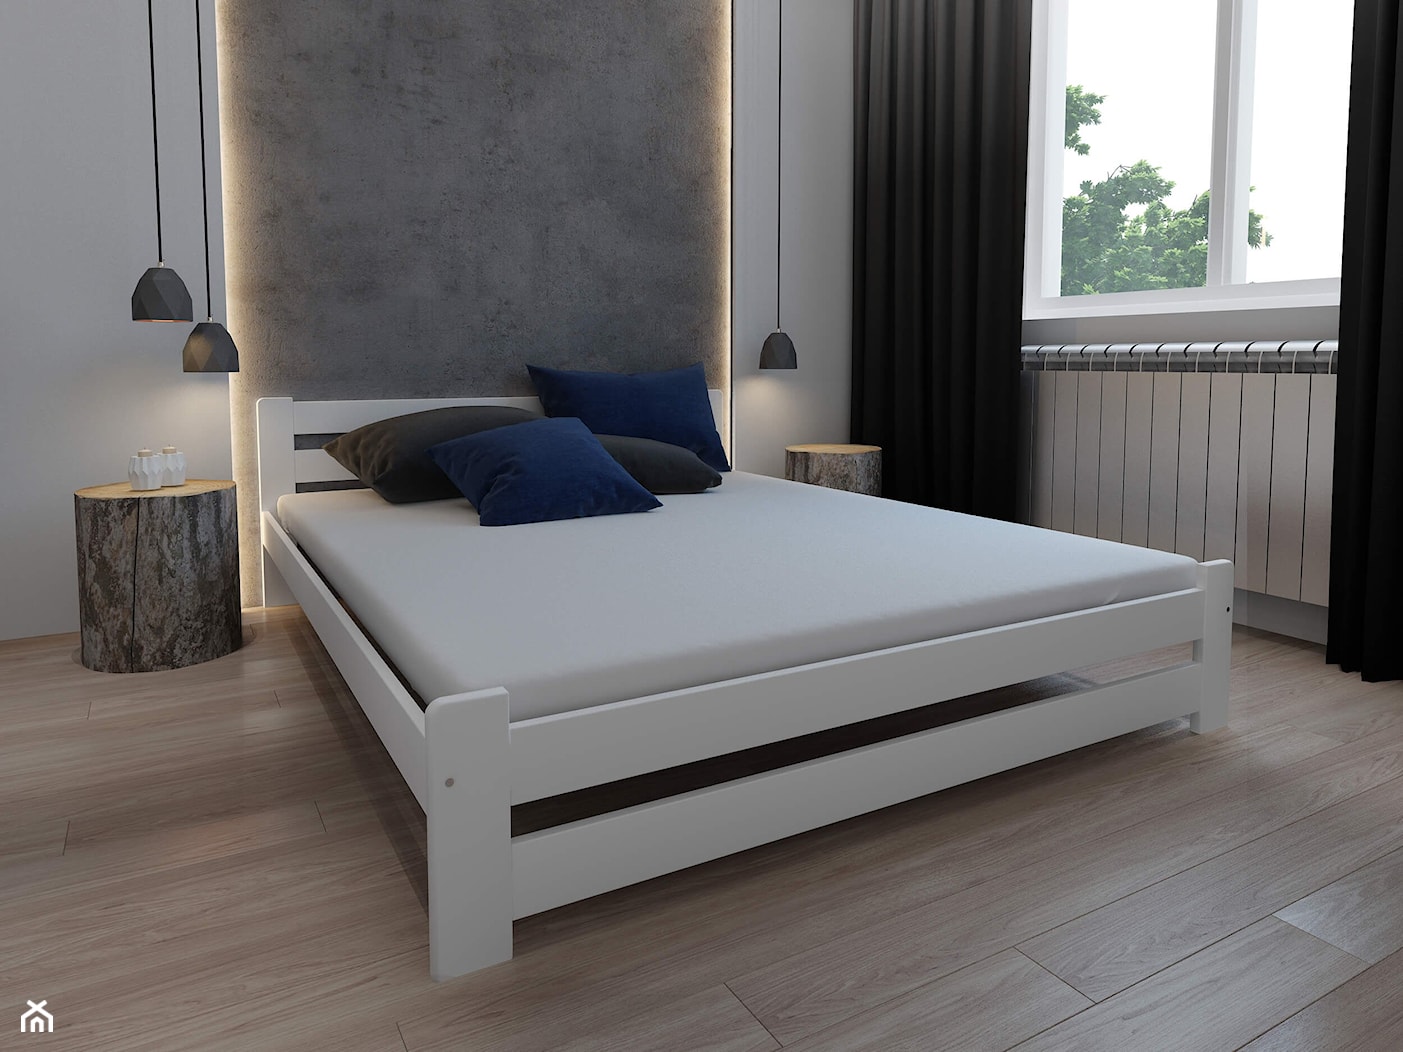 Łóżko sosnowe do sypialni - zdjęcie od DIP-MAR sklep - Homebook